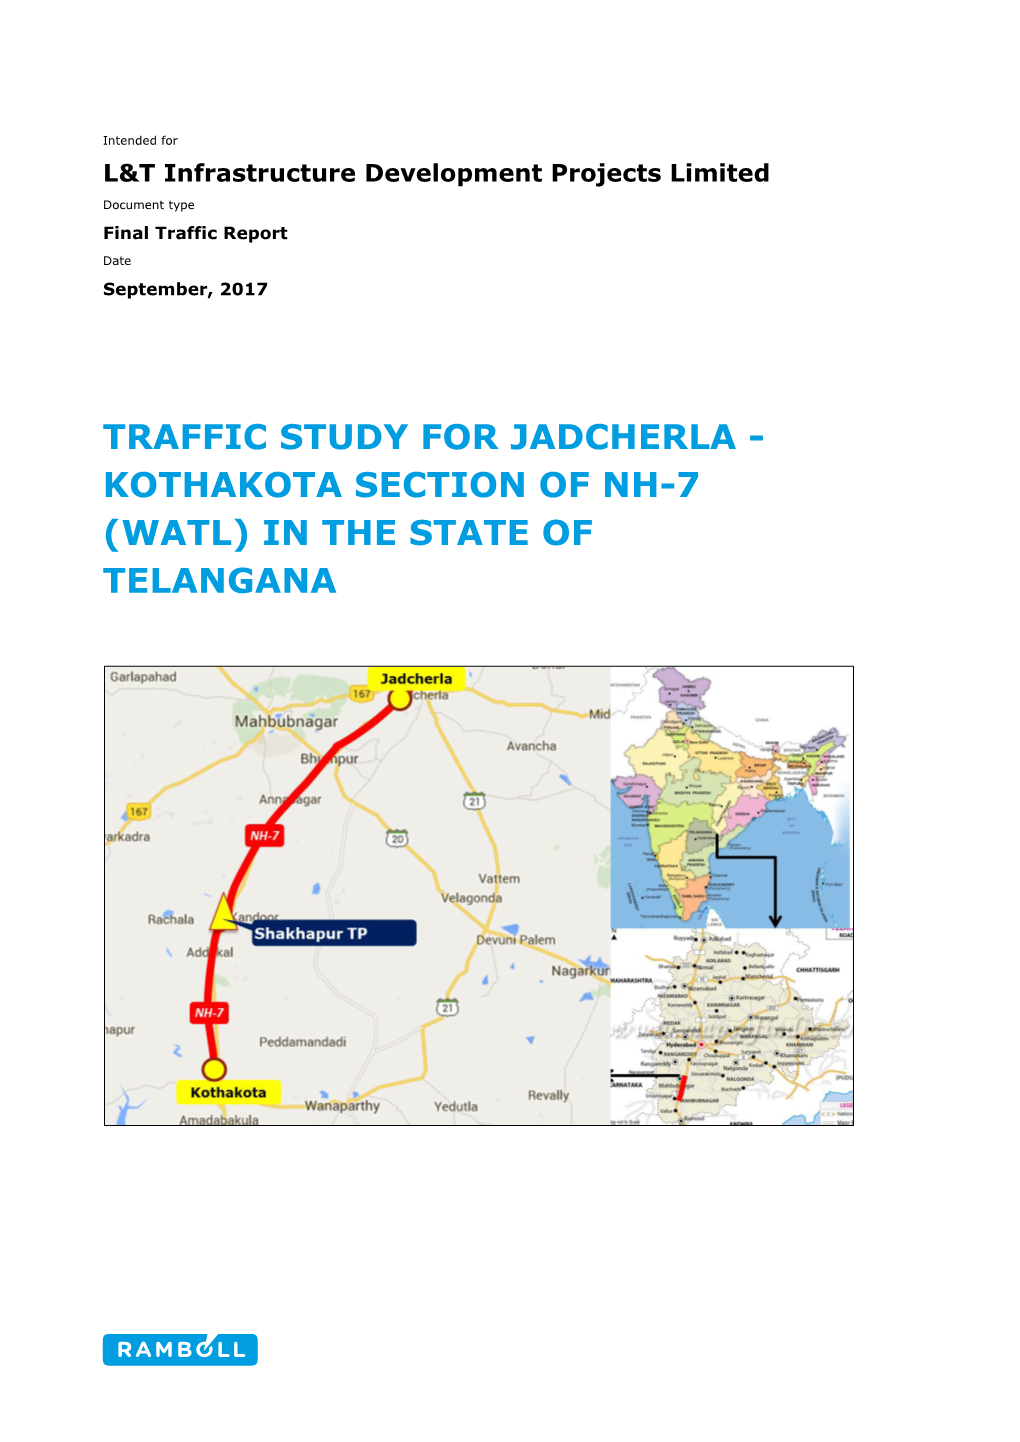 Traffic Study for Jadcherla - Kothakota Section of Nh-7 (Watl) in the State of Telangana